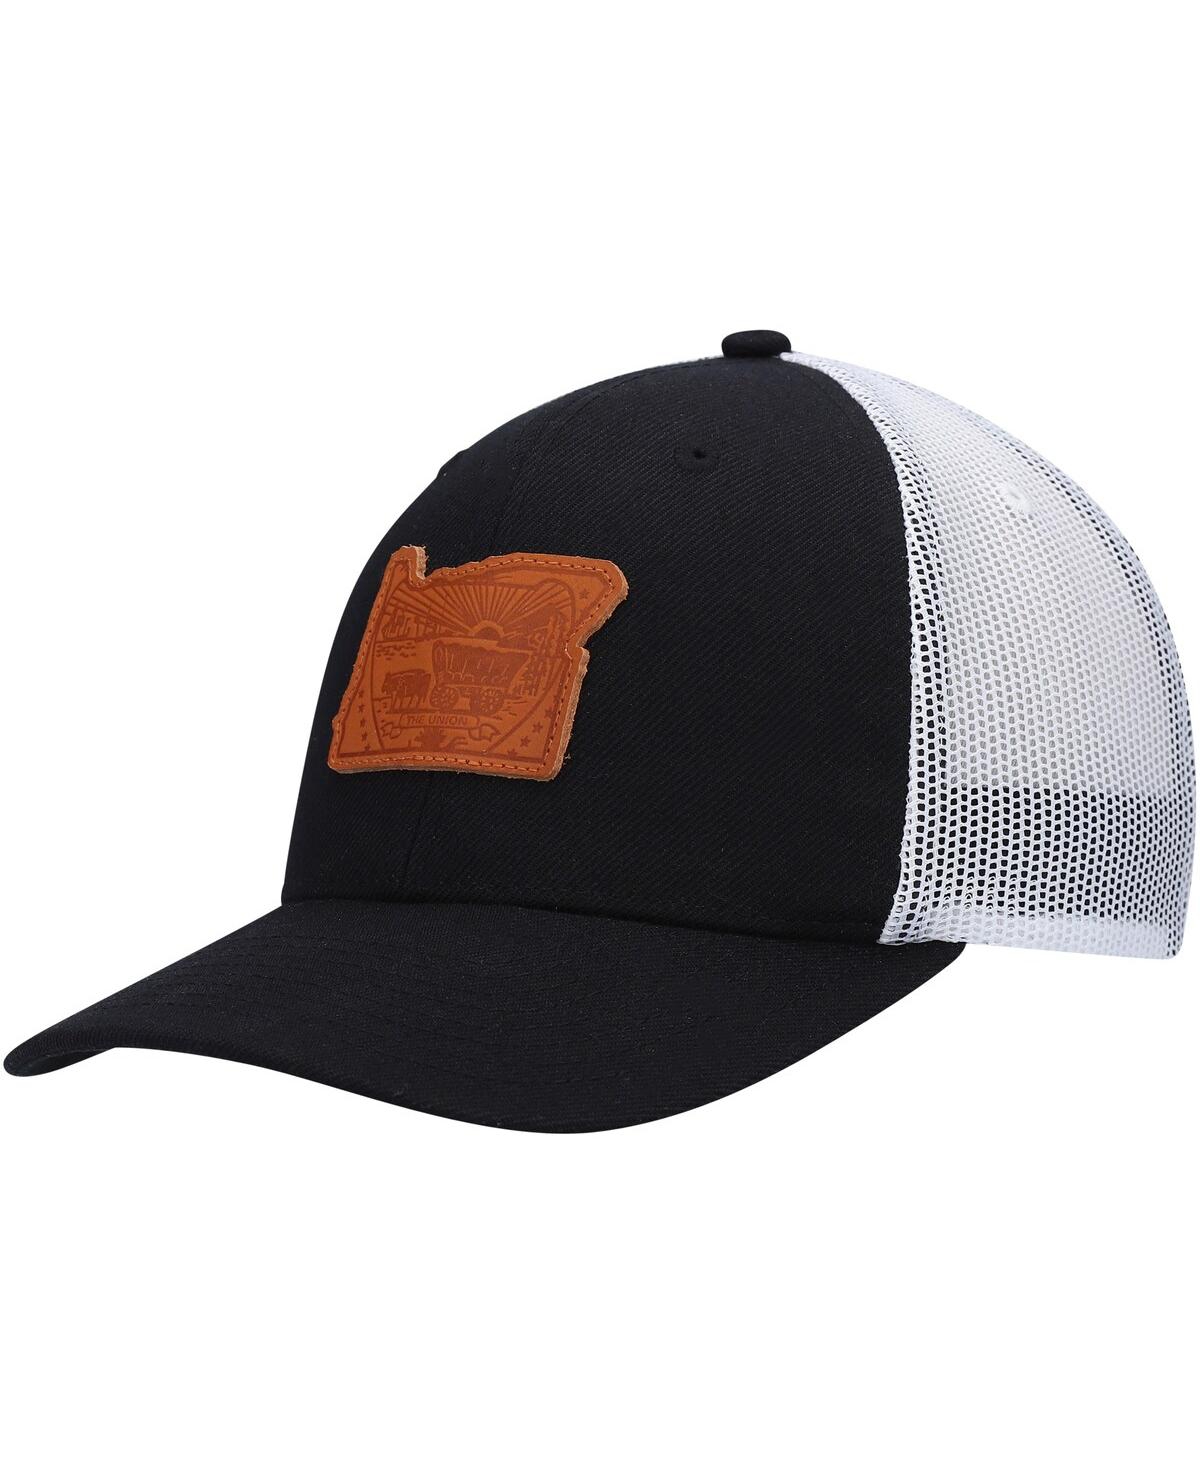 Local Crowns Men's  Black Oregon Leather State Applique Trucker Snapback Hat